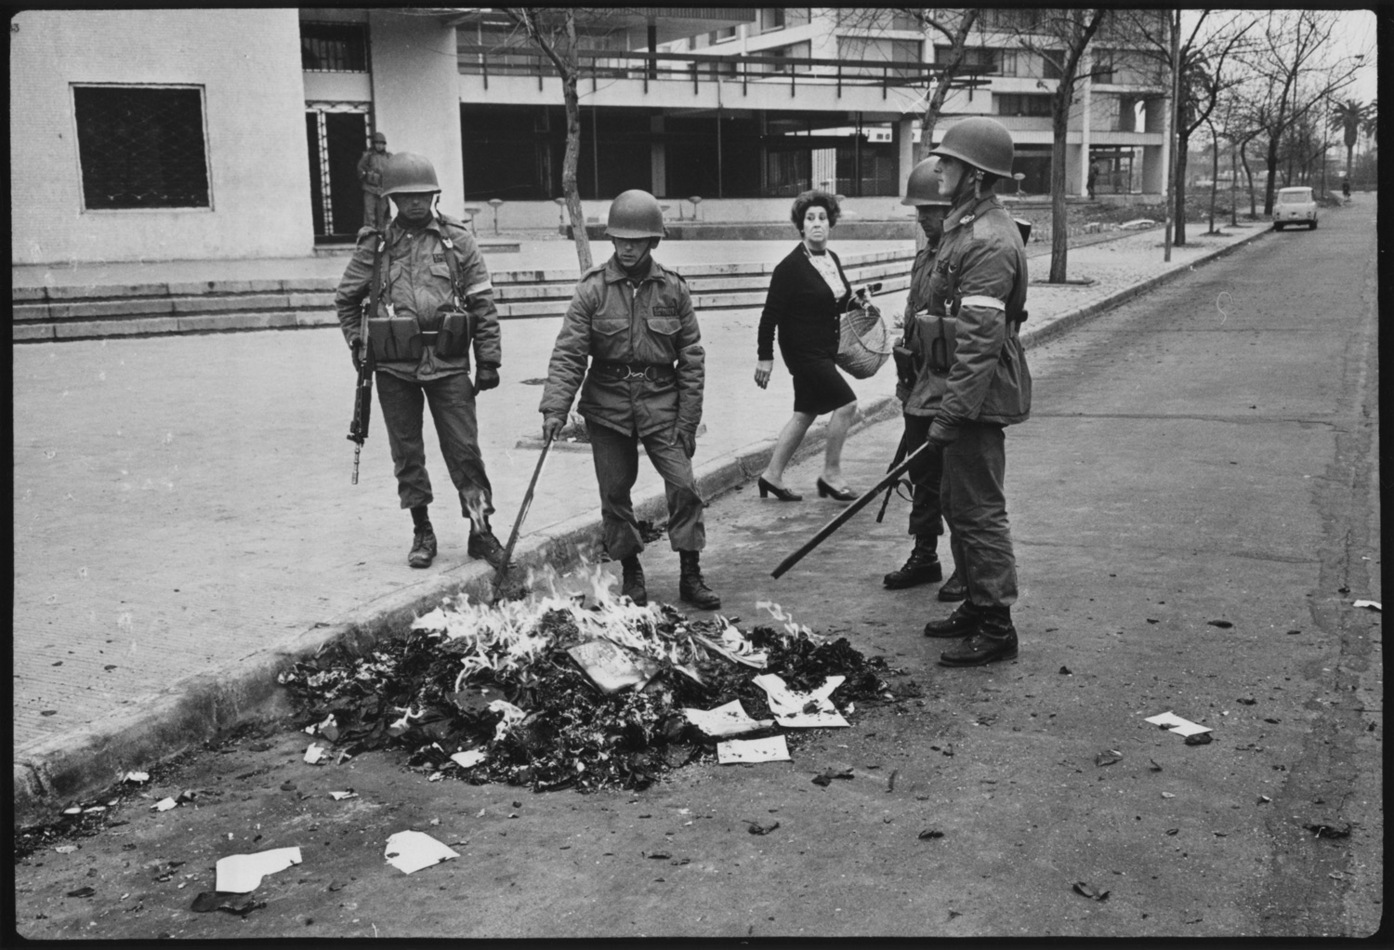 Burning of books on Paraguay Avenue, Santiago : Chile: 40 Years After the Coup d'Etat : David Burnett | Photographer